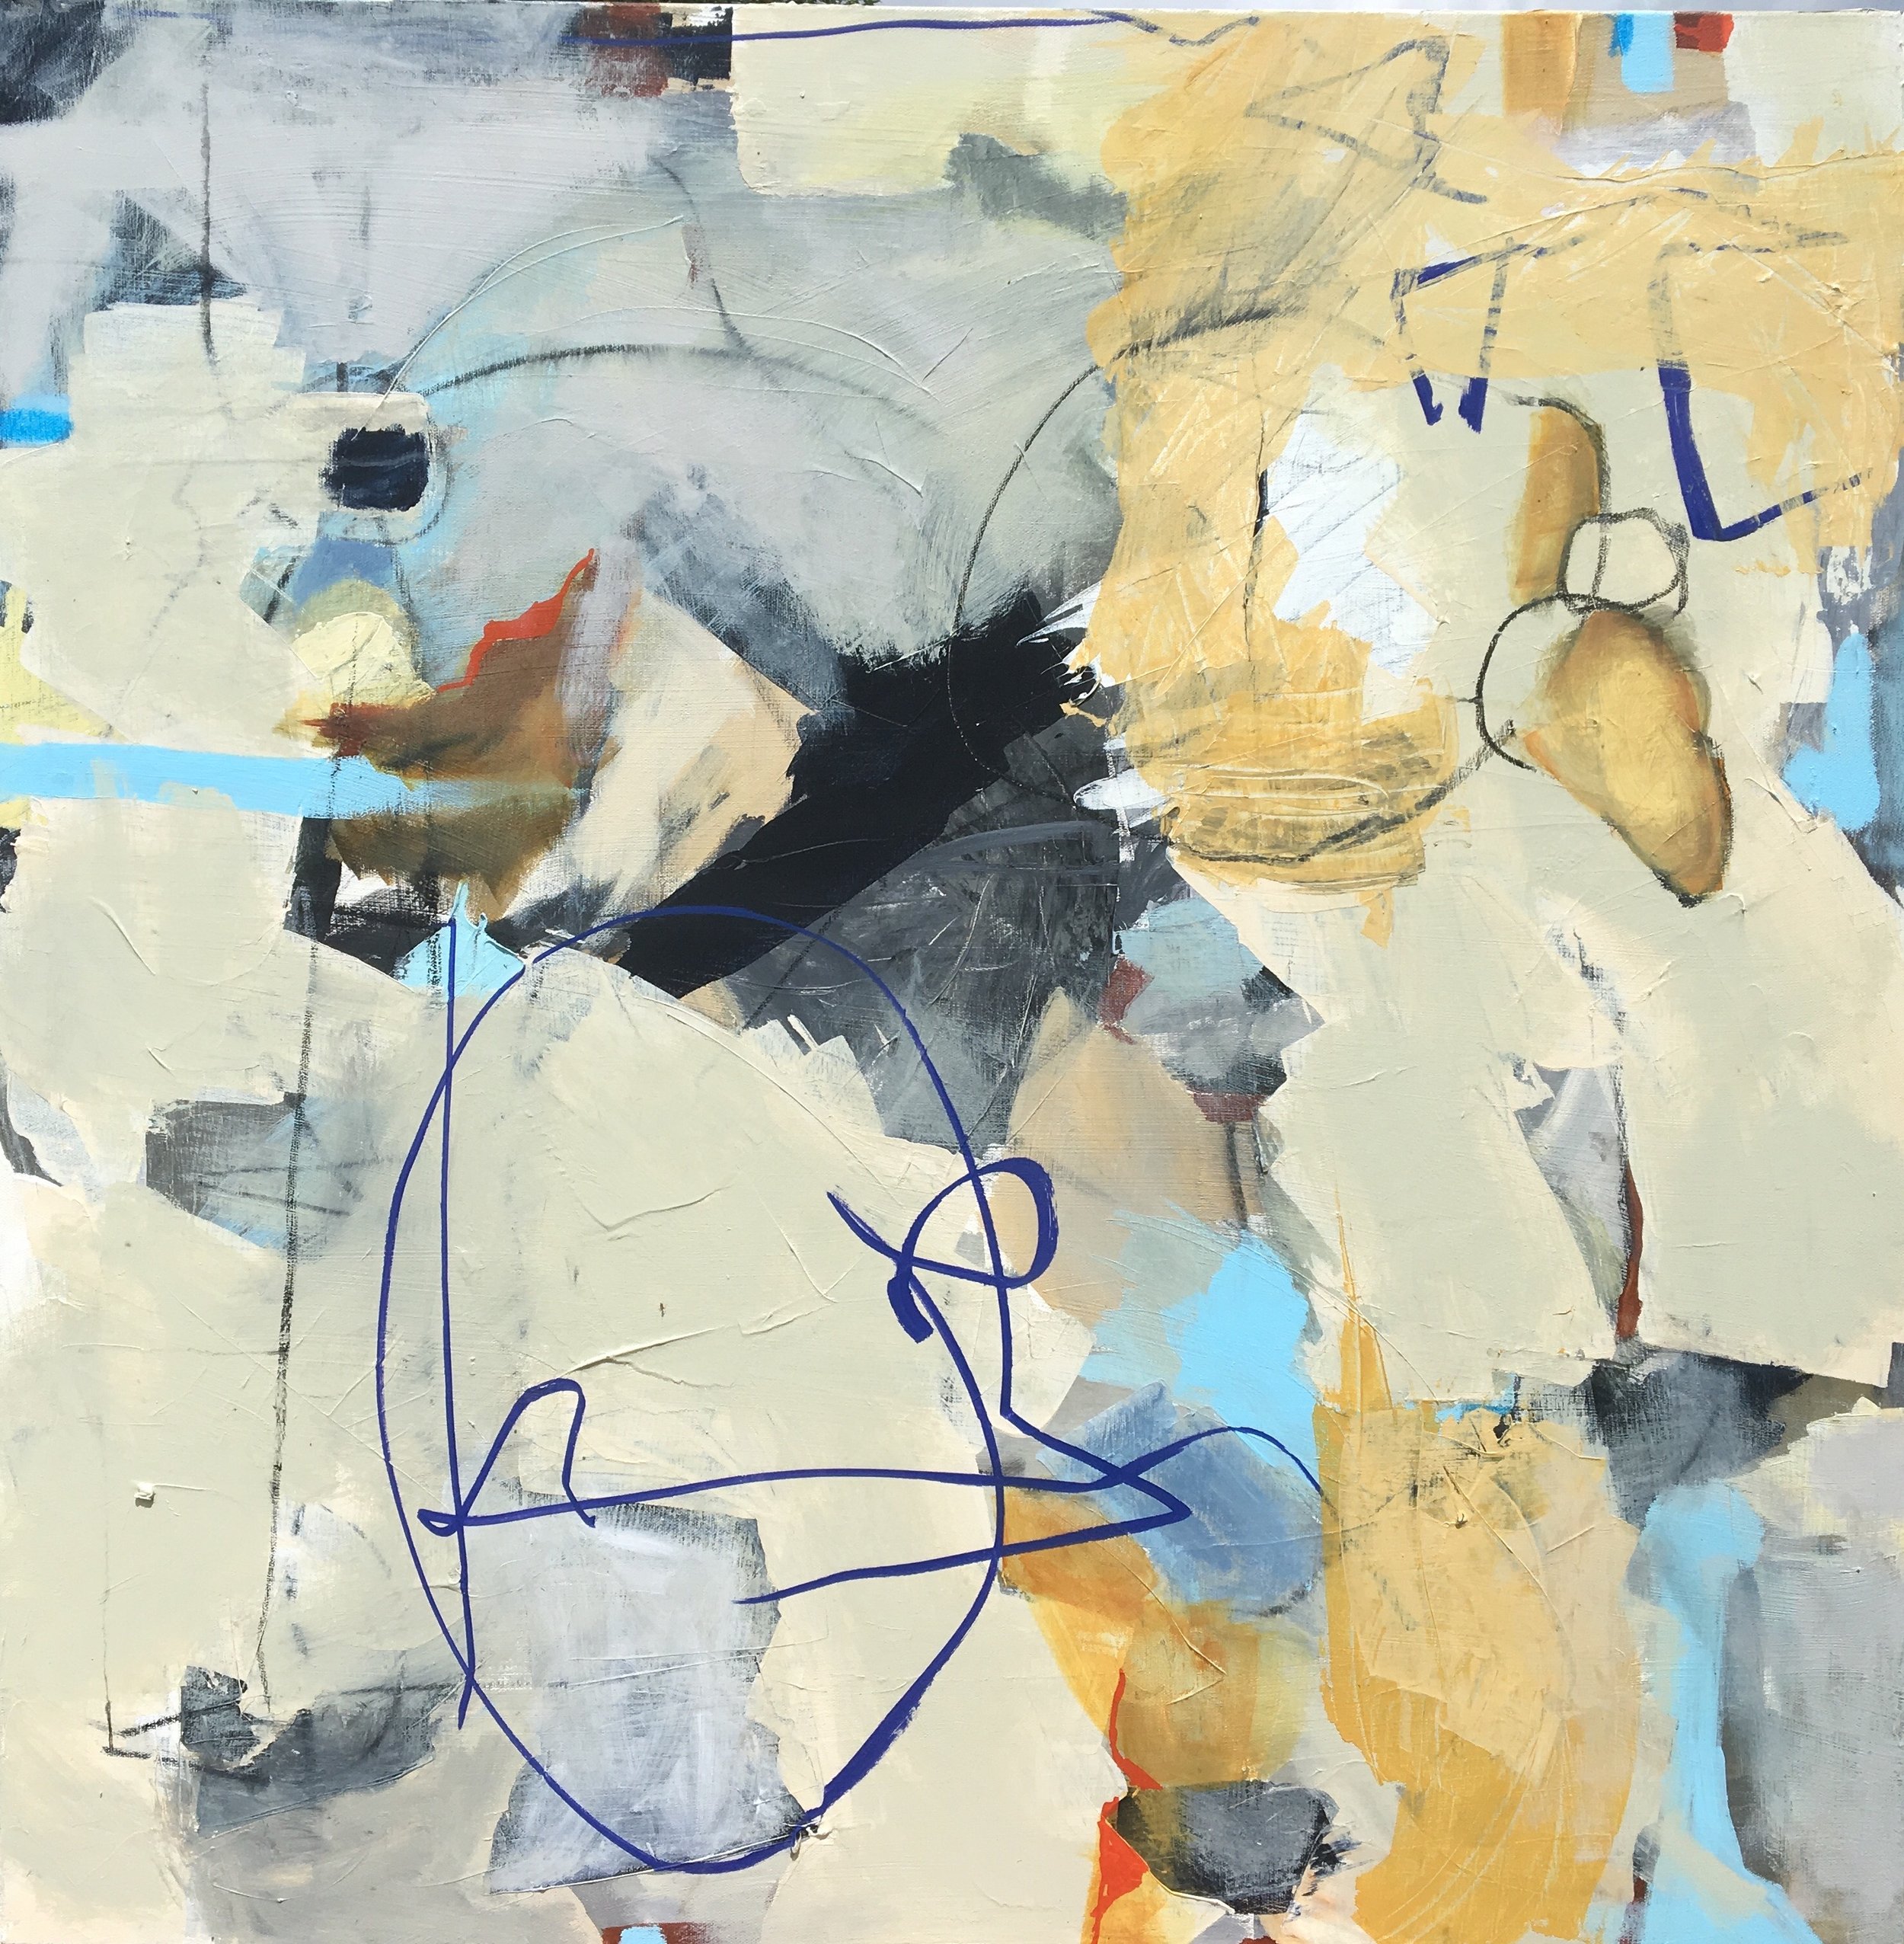 Caroline Weld, "Pebble Pile," 2018, acrylic on canvas, 37 1/2" x 37 1/2"